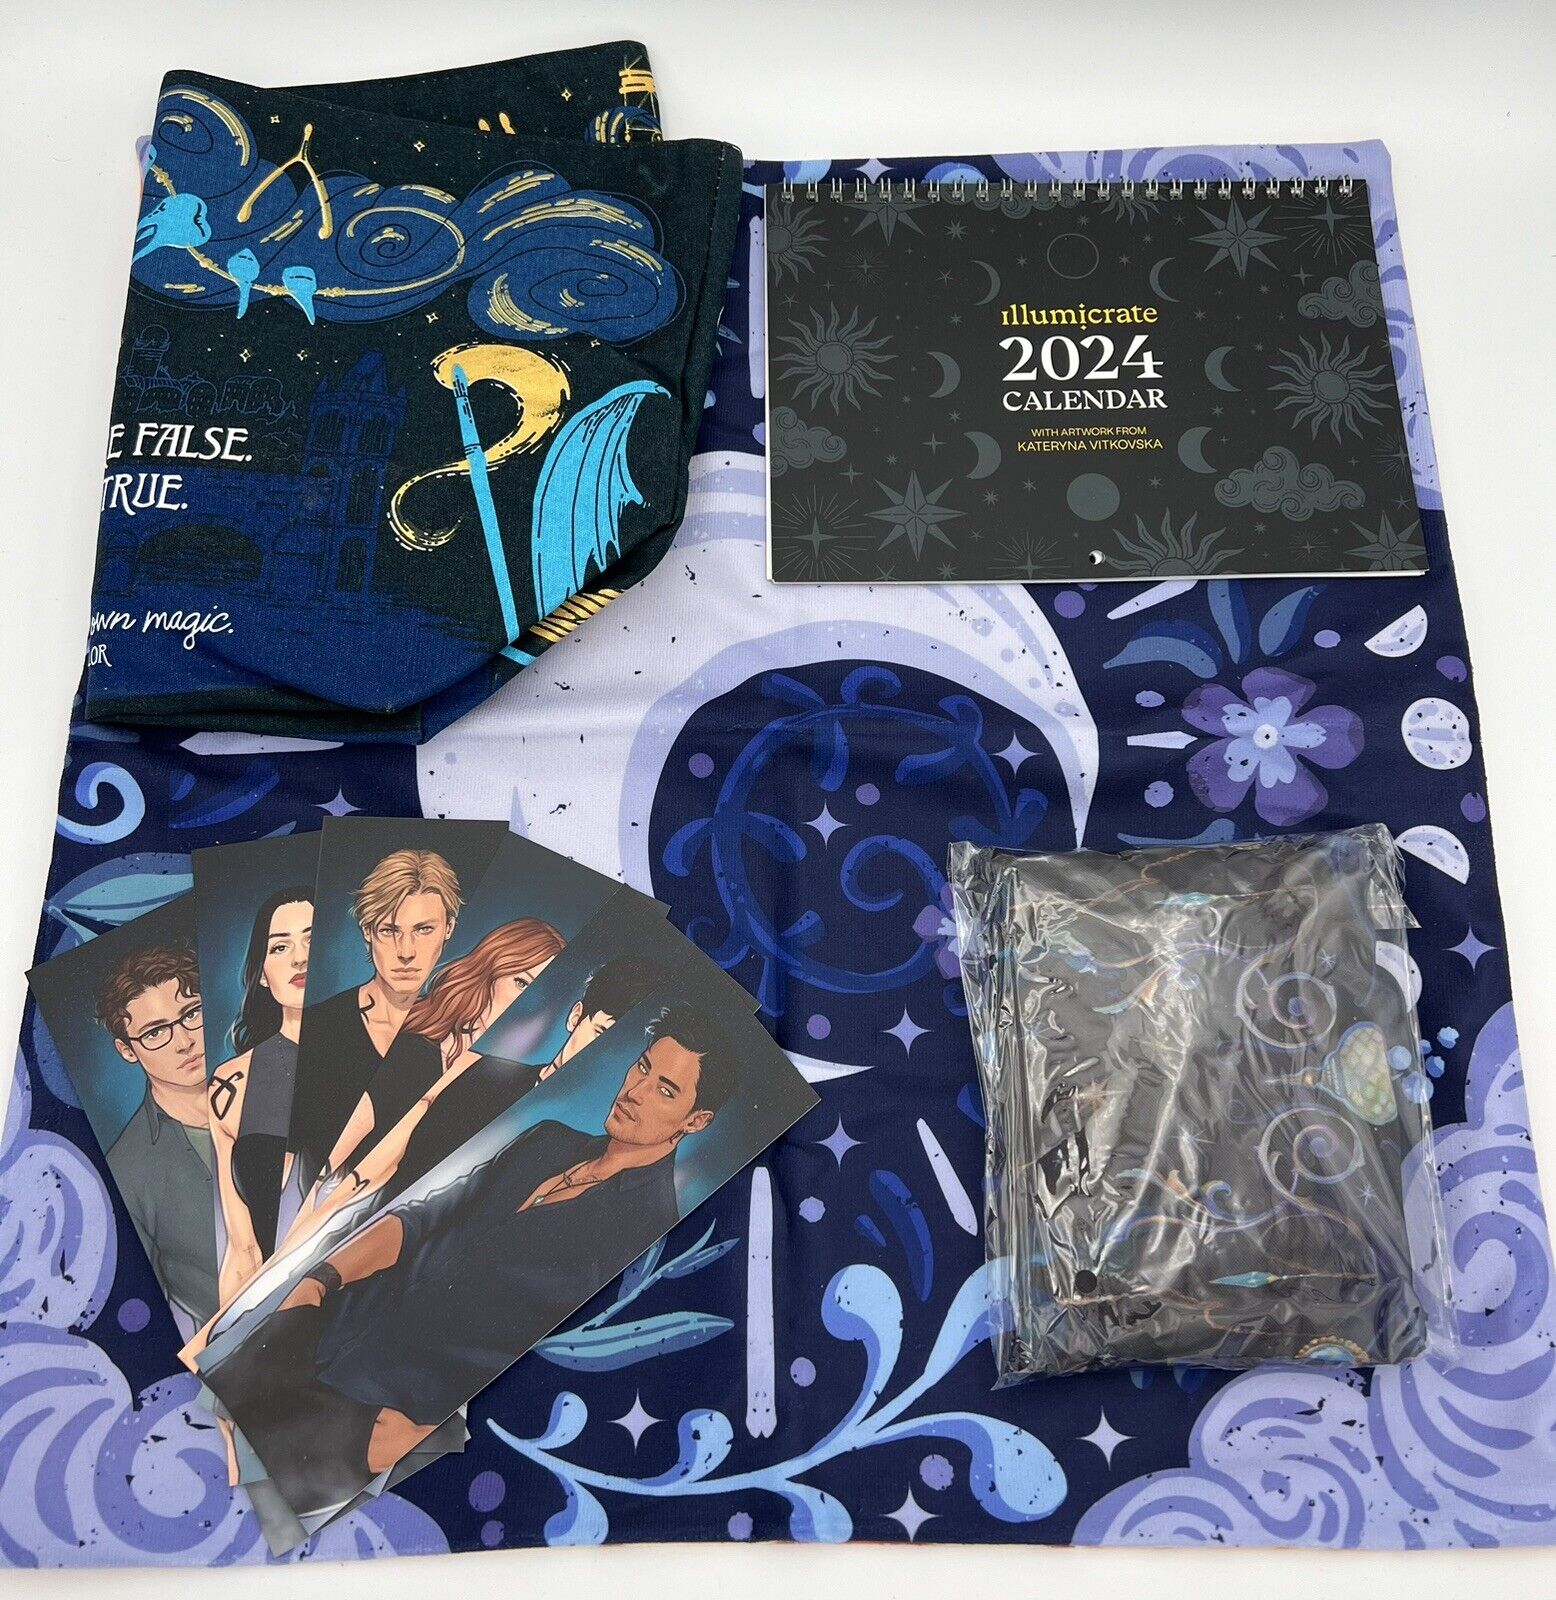 Lot of Various Illumicrate Items - Illumicrate Bundle 2023 And 2024